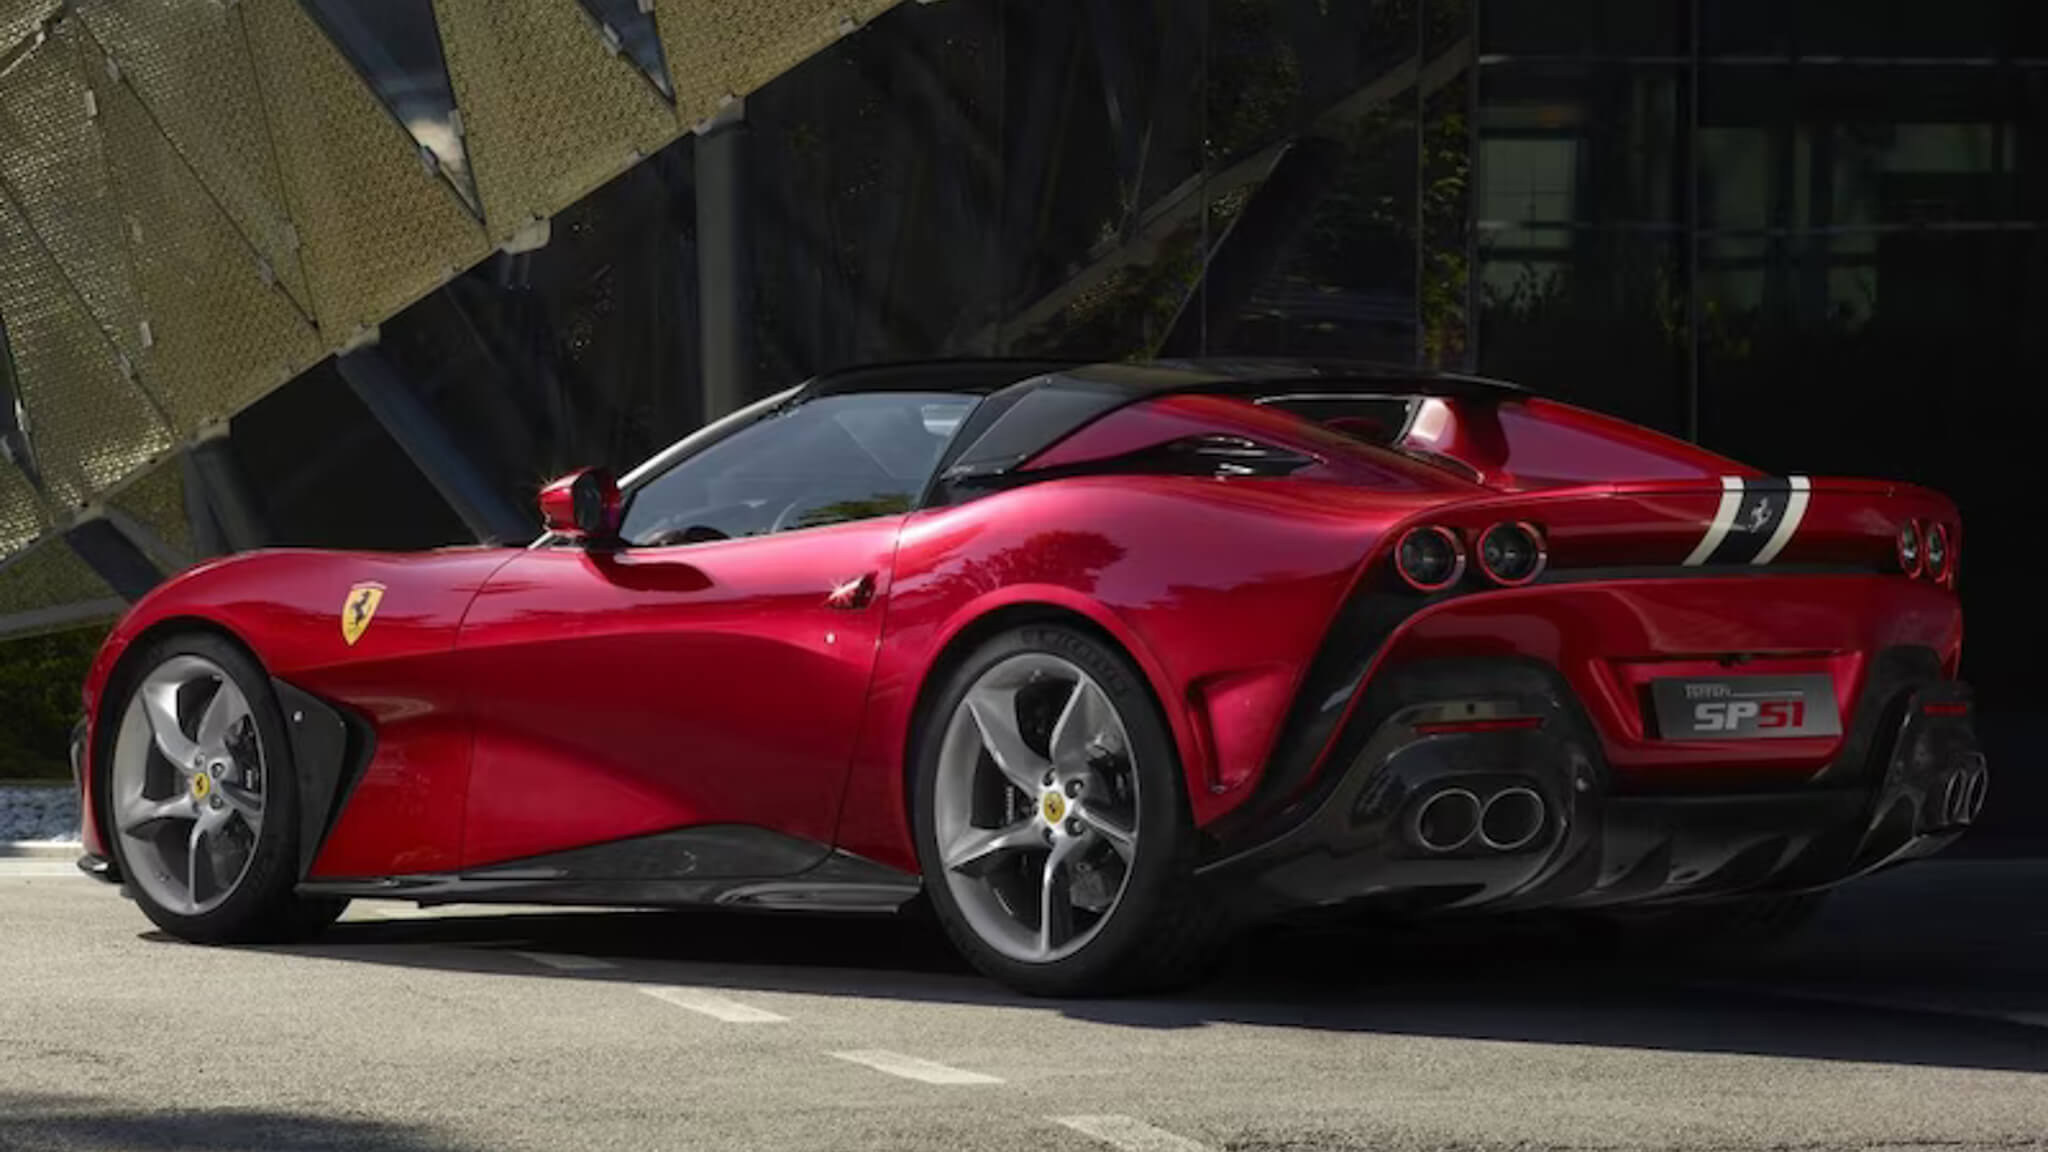 2022 Ferrari SP51 rear